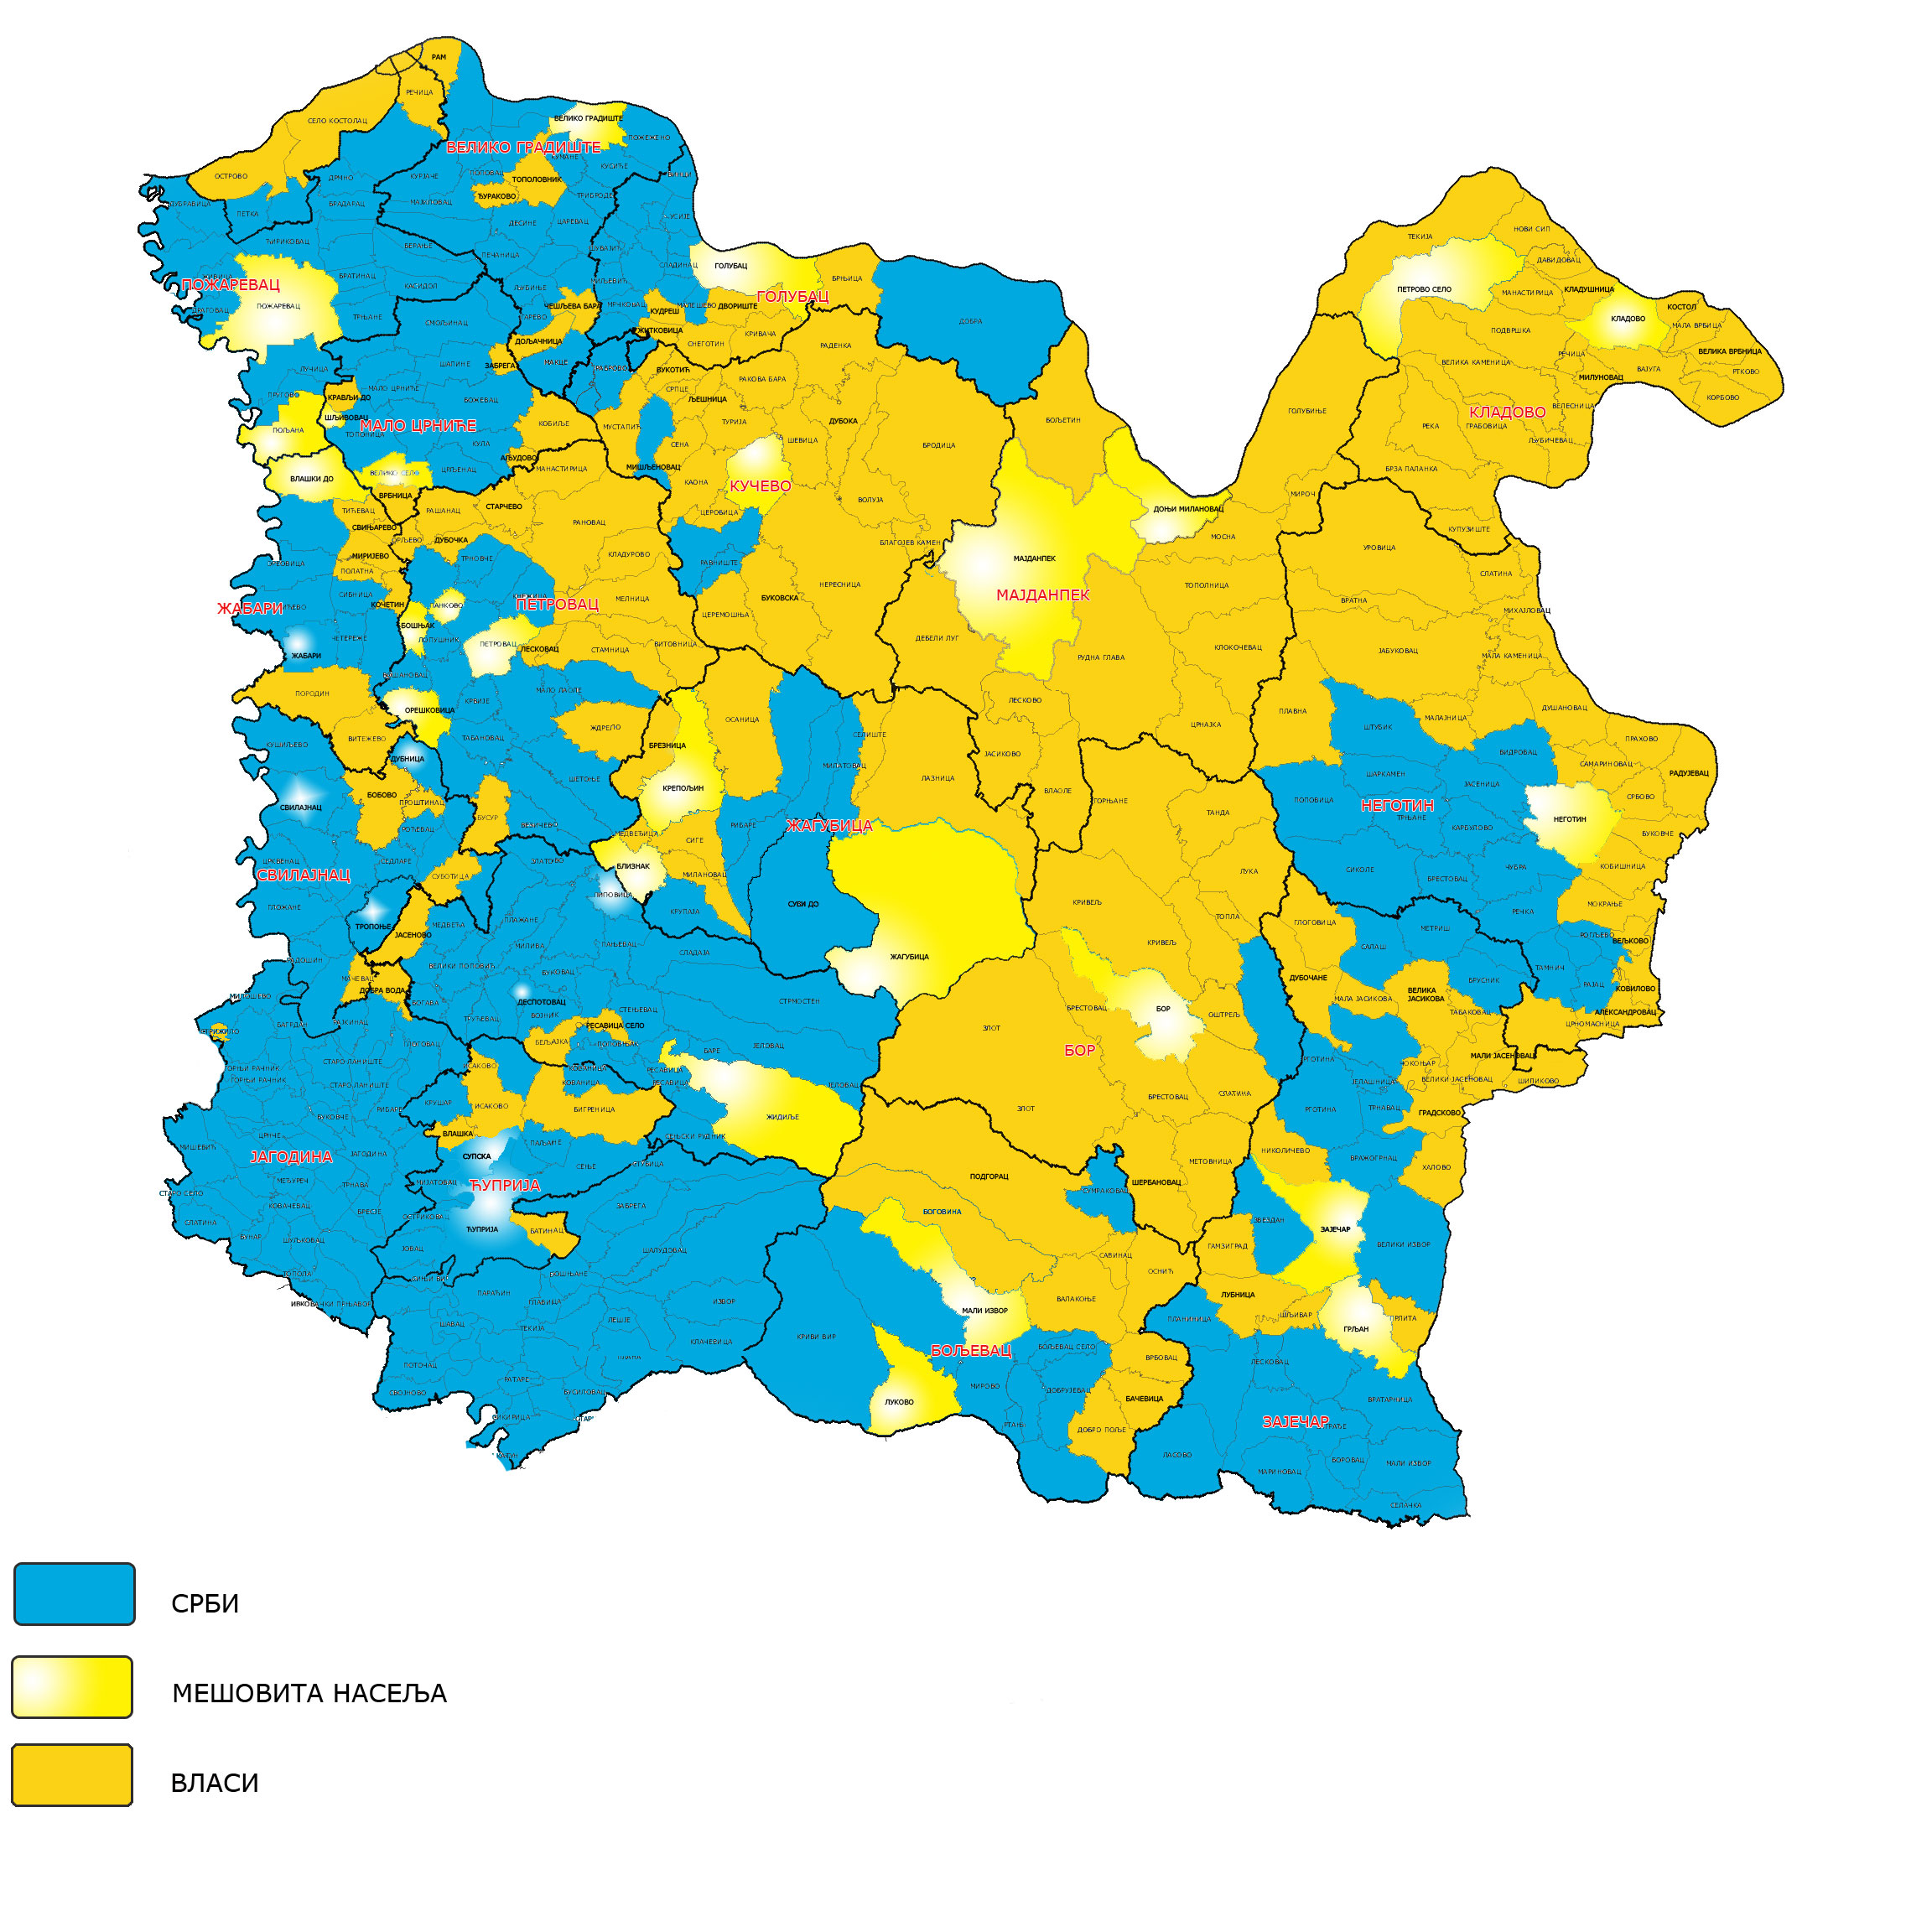 etnicka karta vojvodine Referendum o statusu Vojvodine   Stranica 29   Forum.hr etnicka karta vojvodine